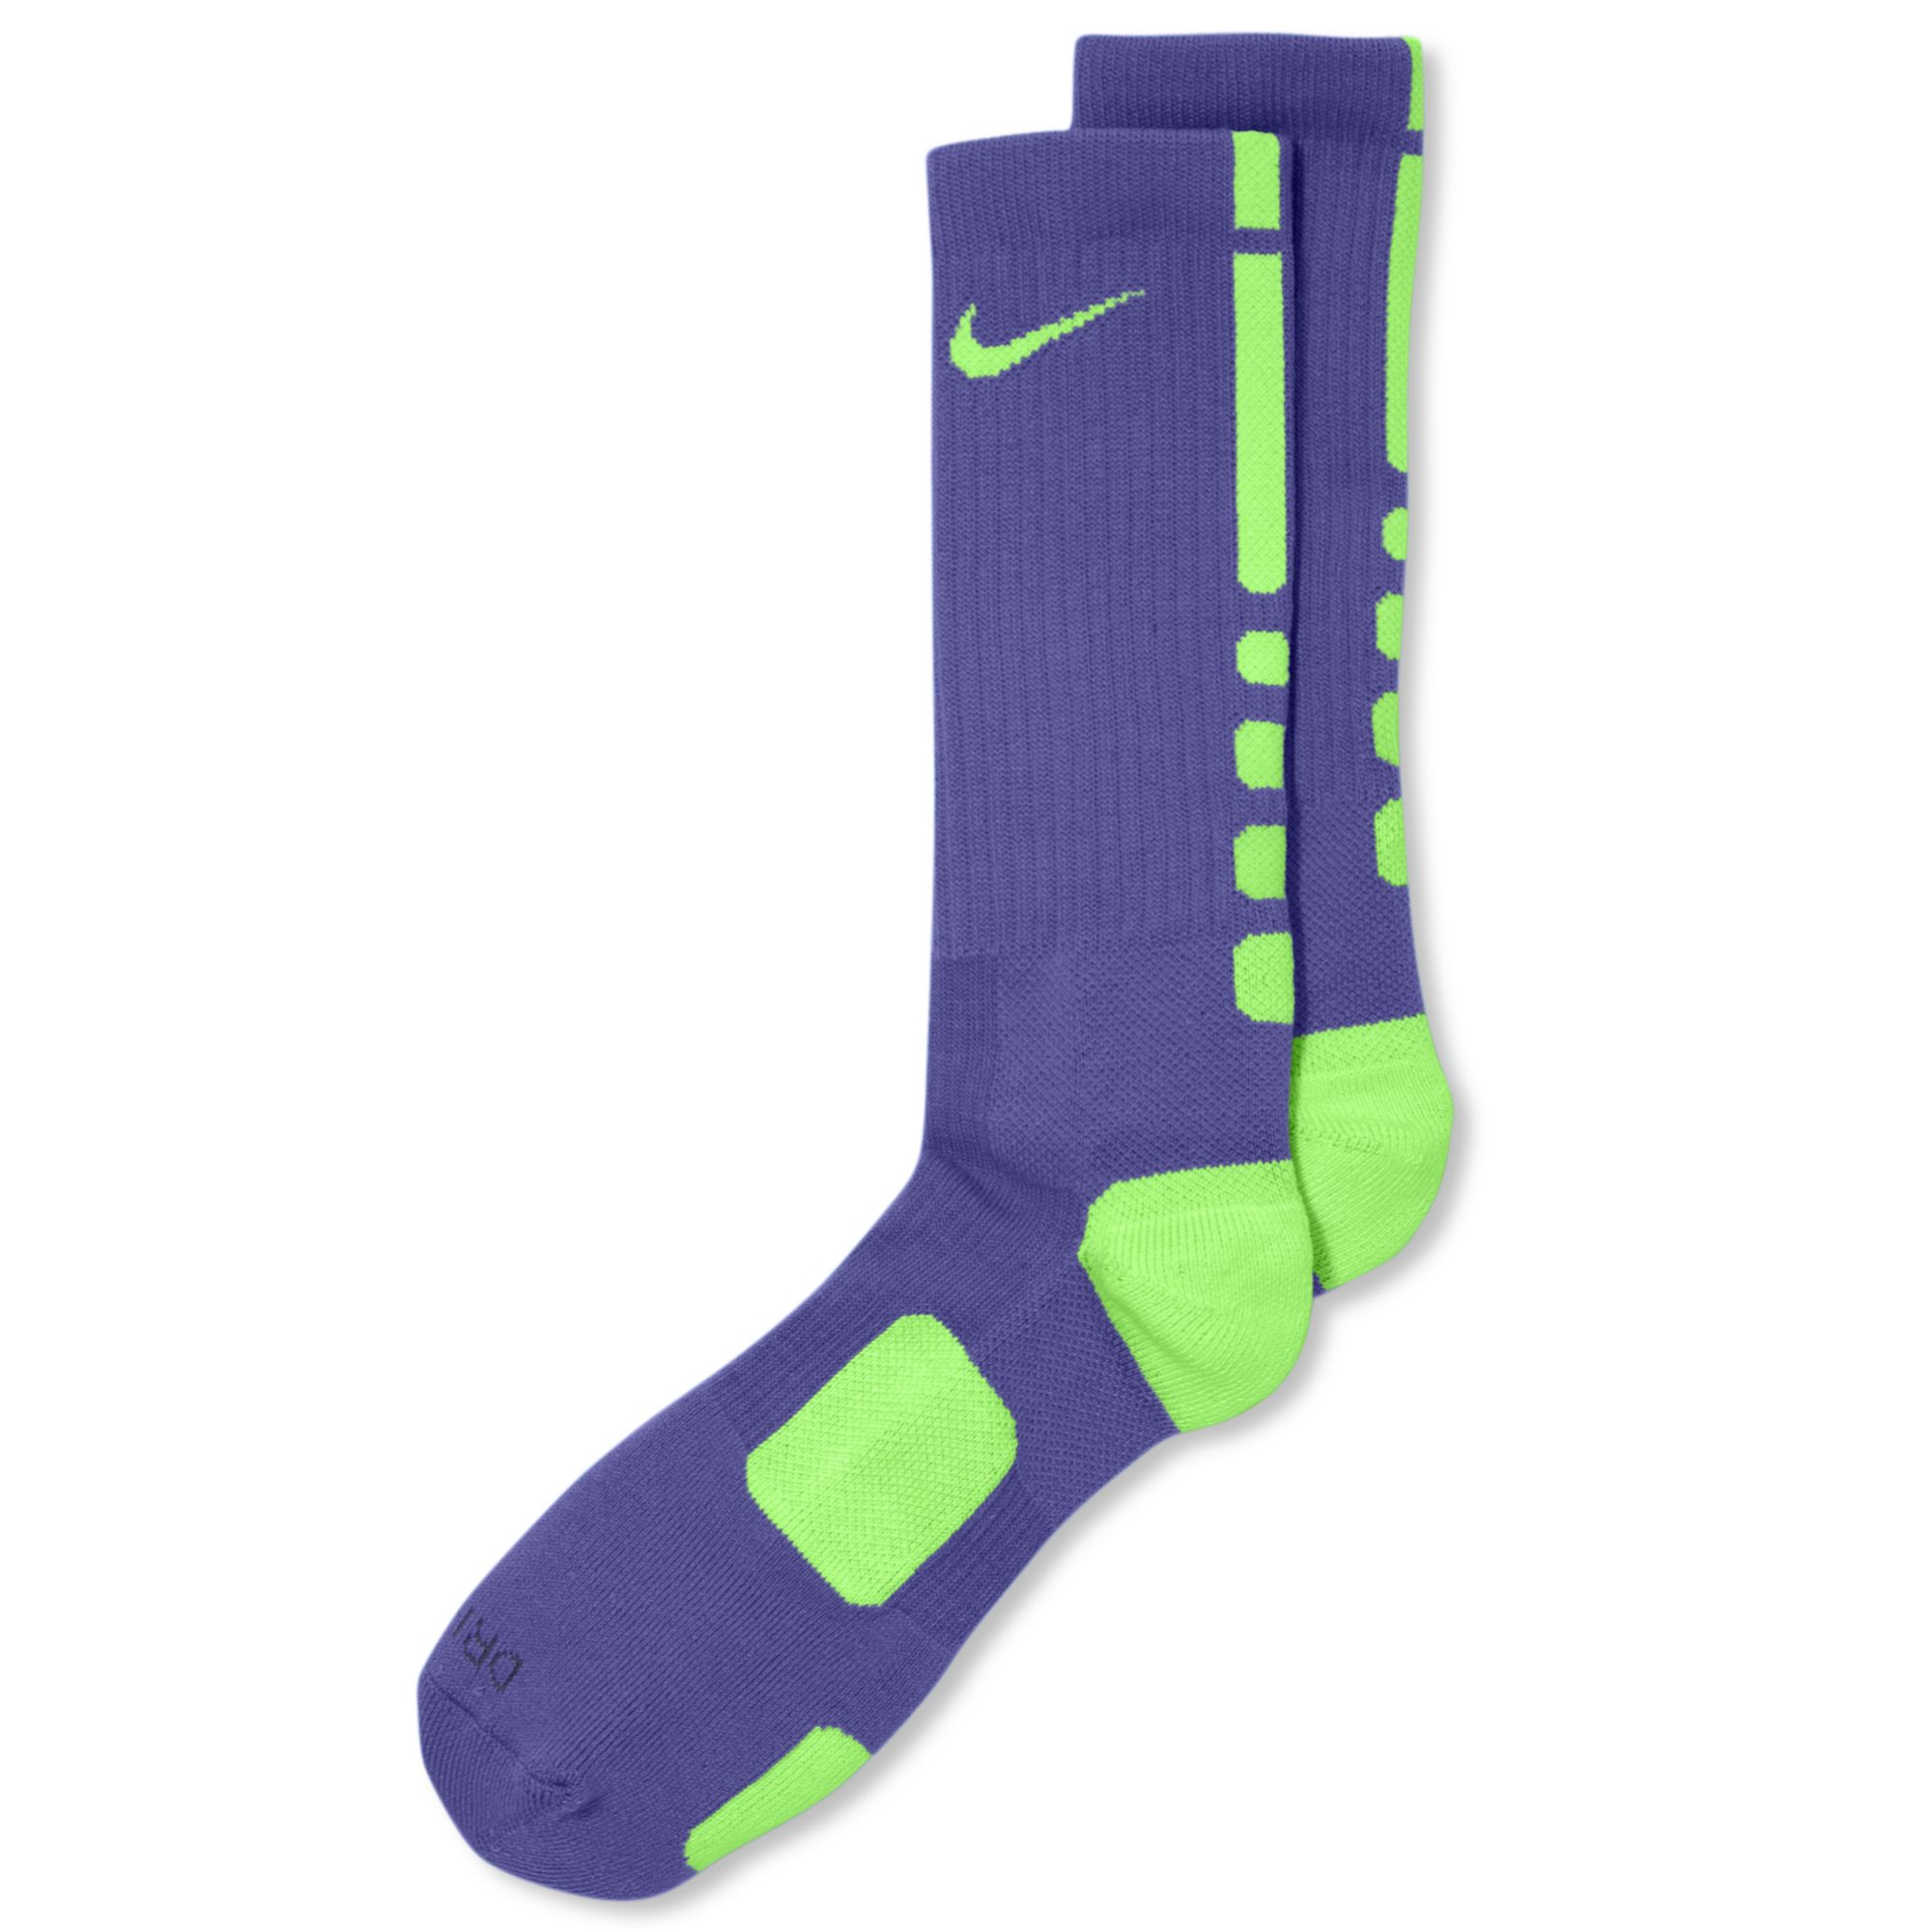 neon green basketball socks